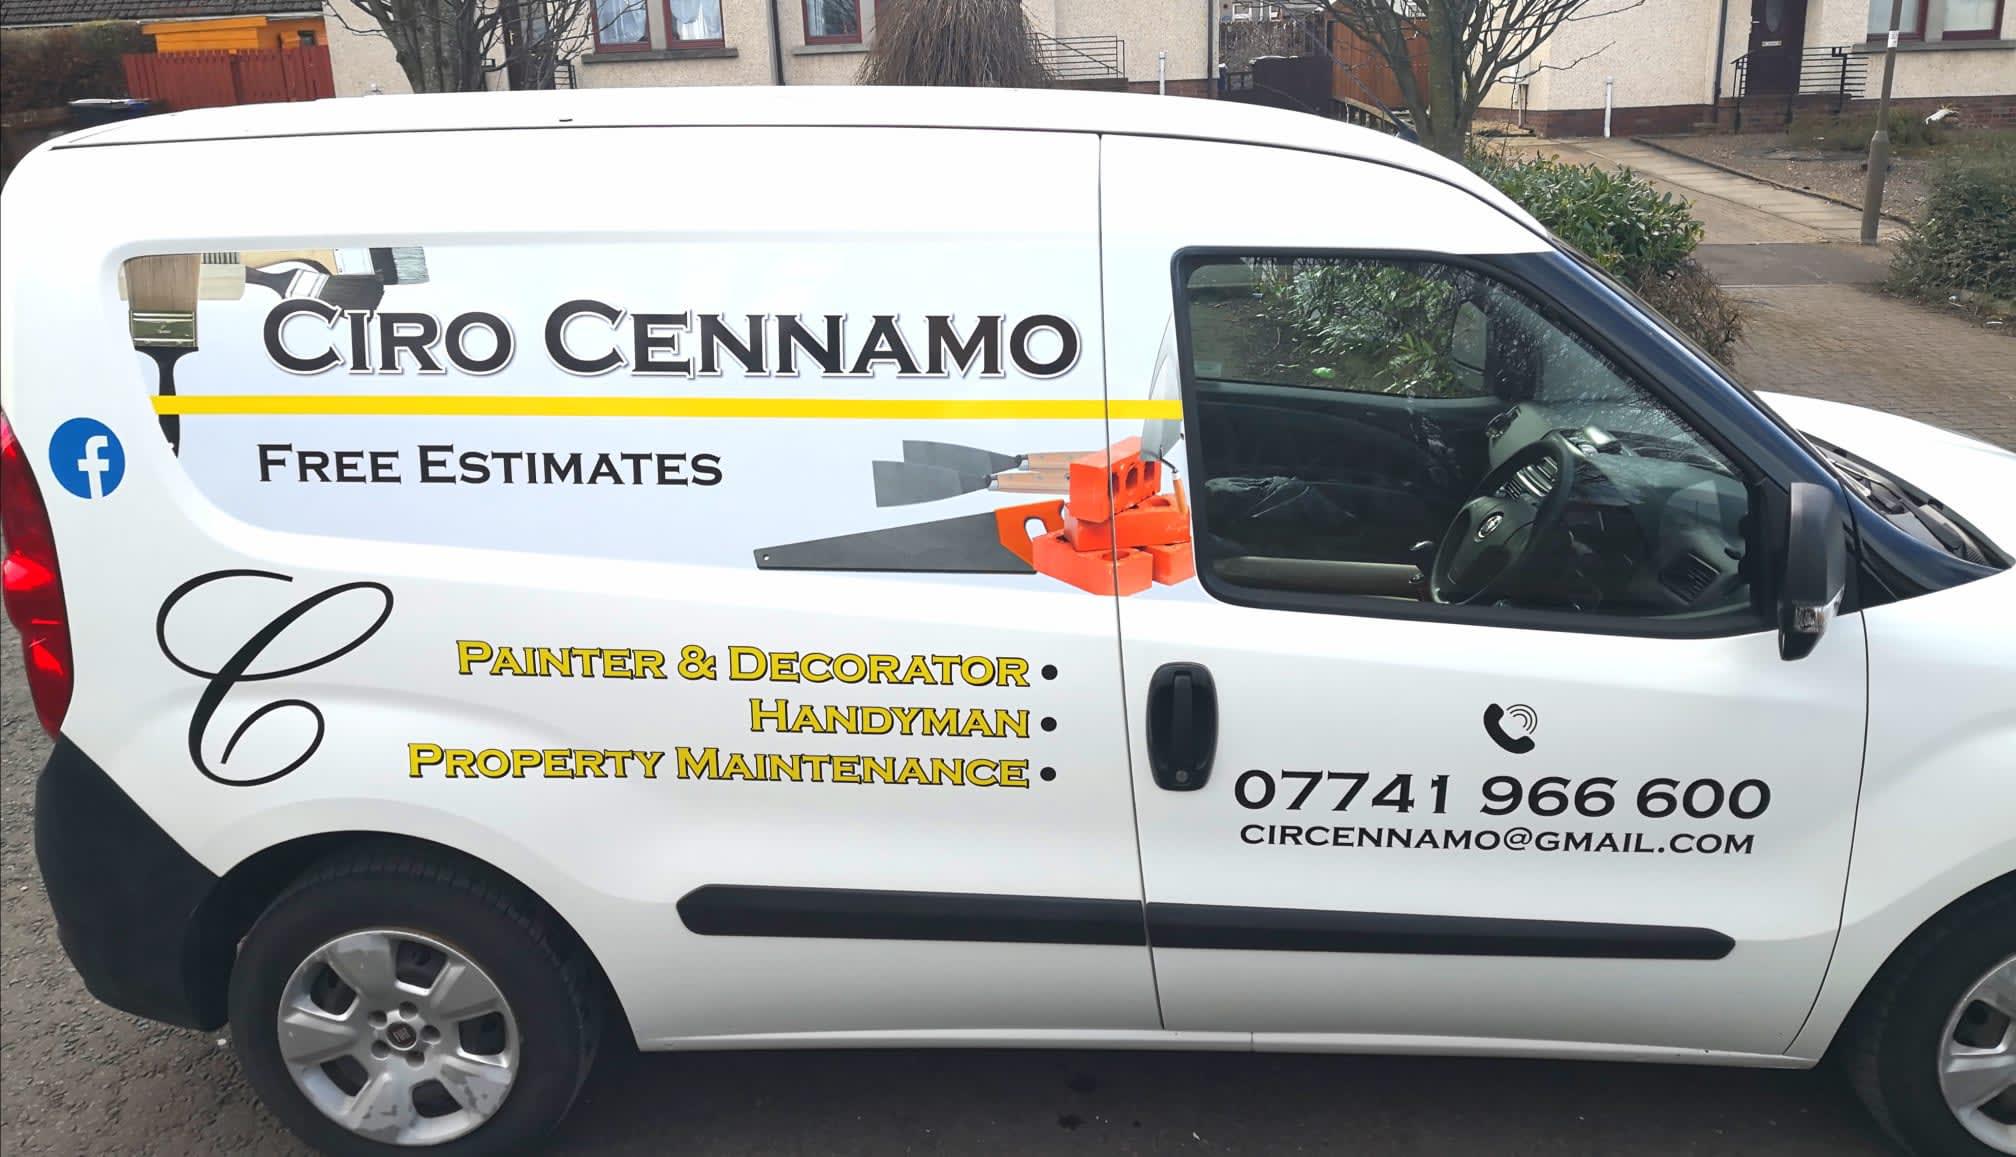 Ciro Cennamo Painter & Decorator/Property Maintenance Prestonpans 07741 966600